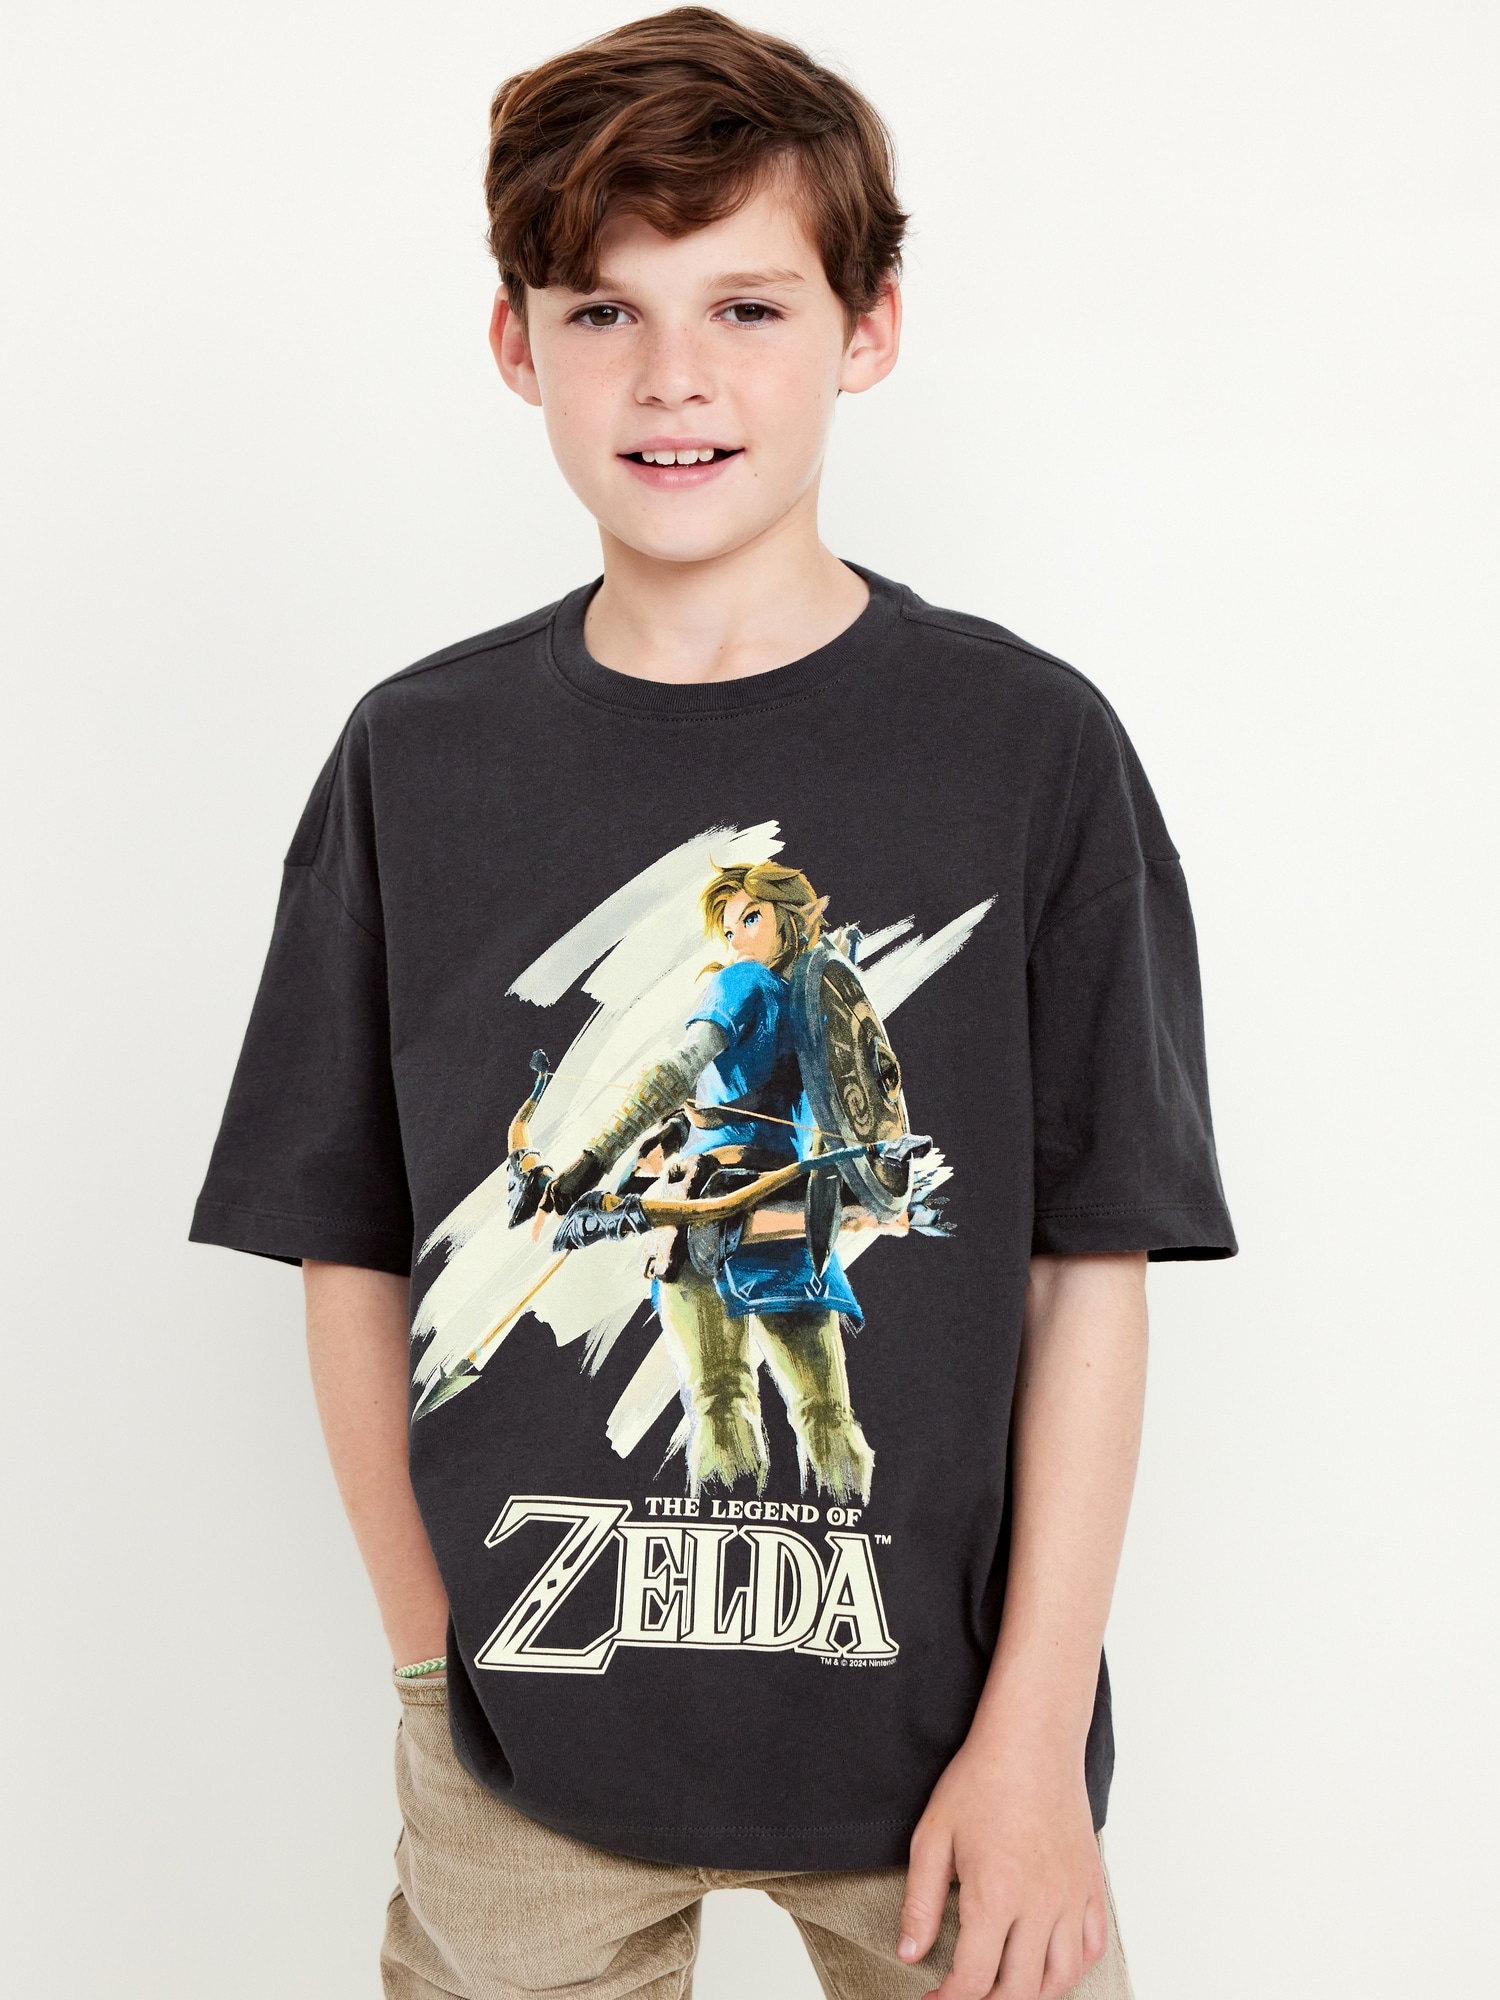 The Legend of Zelda™ Oversized Gender-Neutral Graphic T-Shirt for Kids